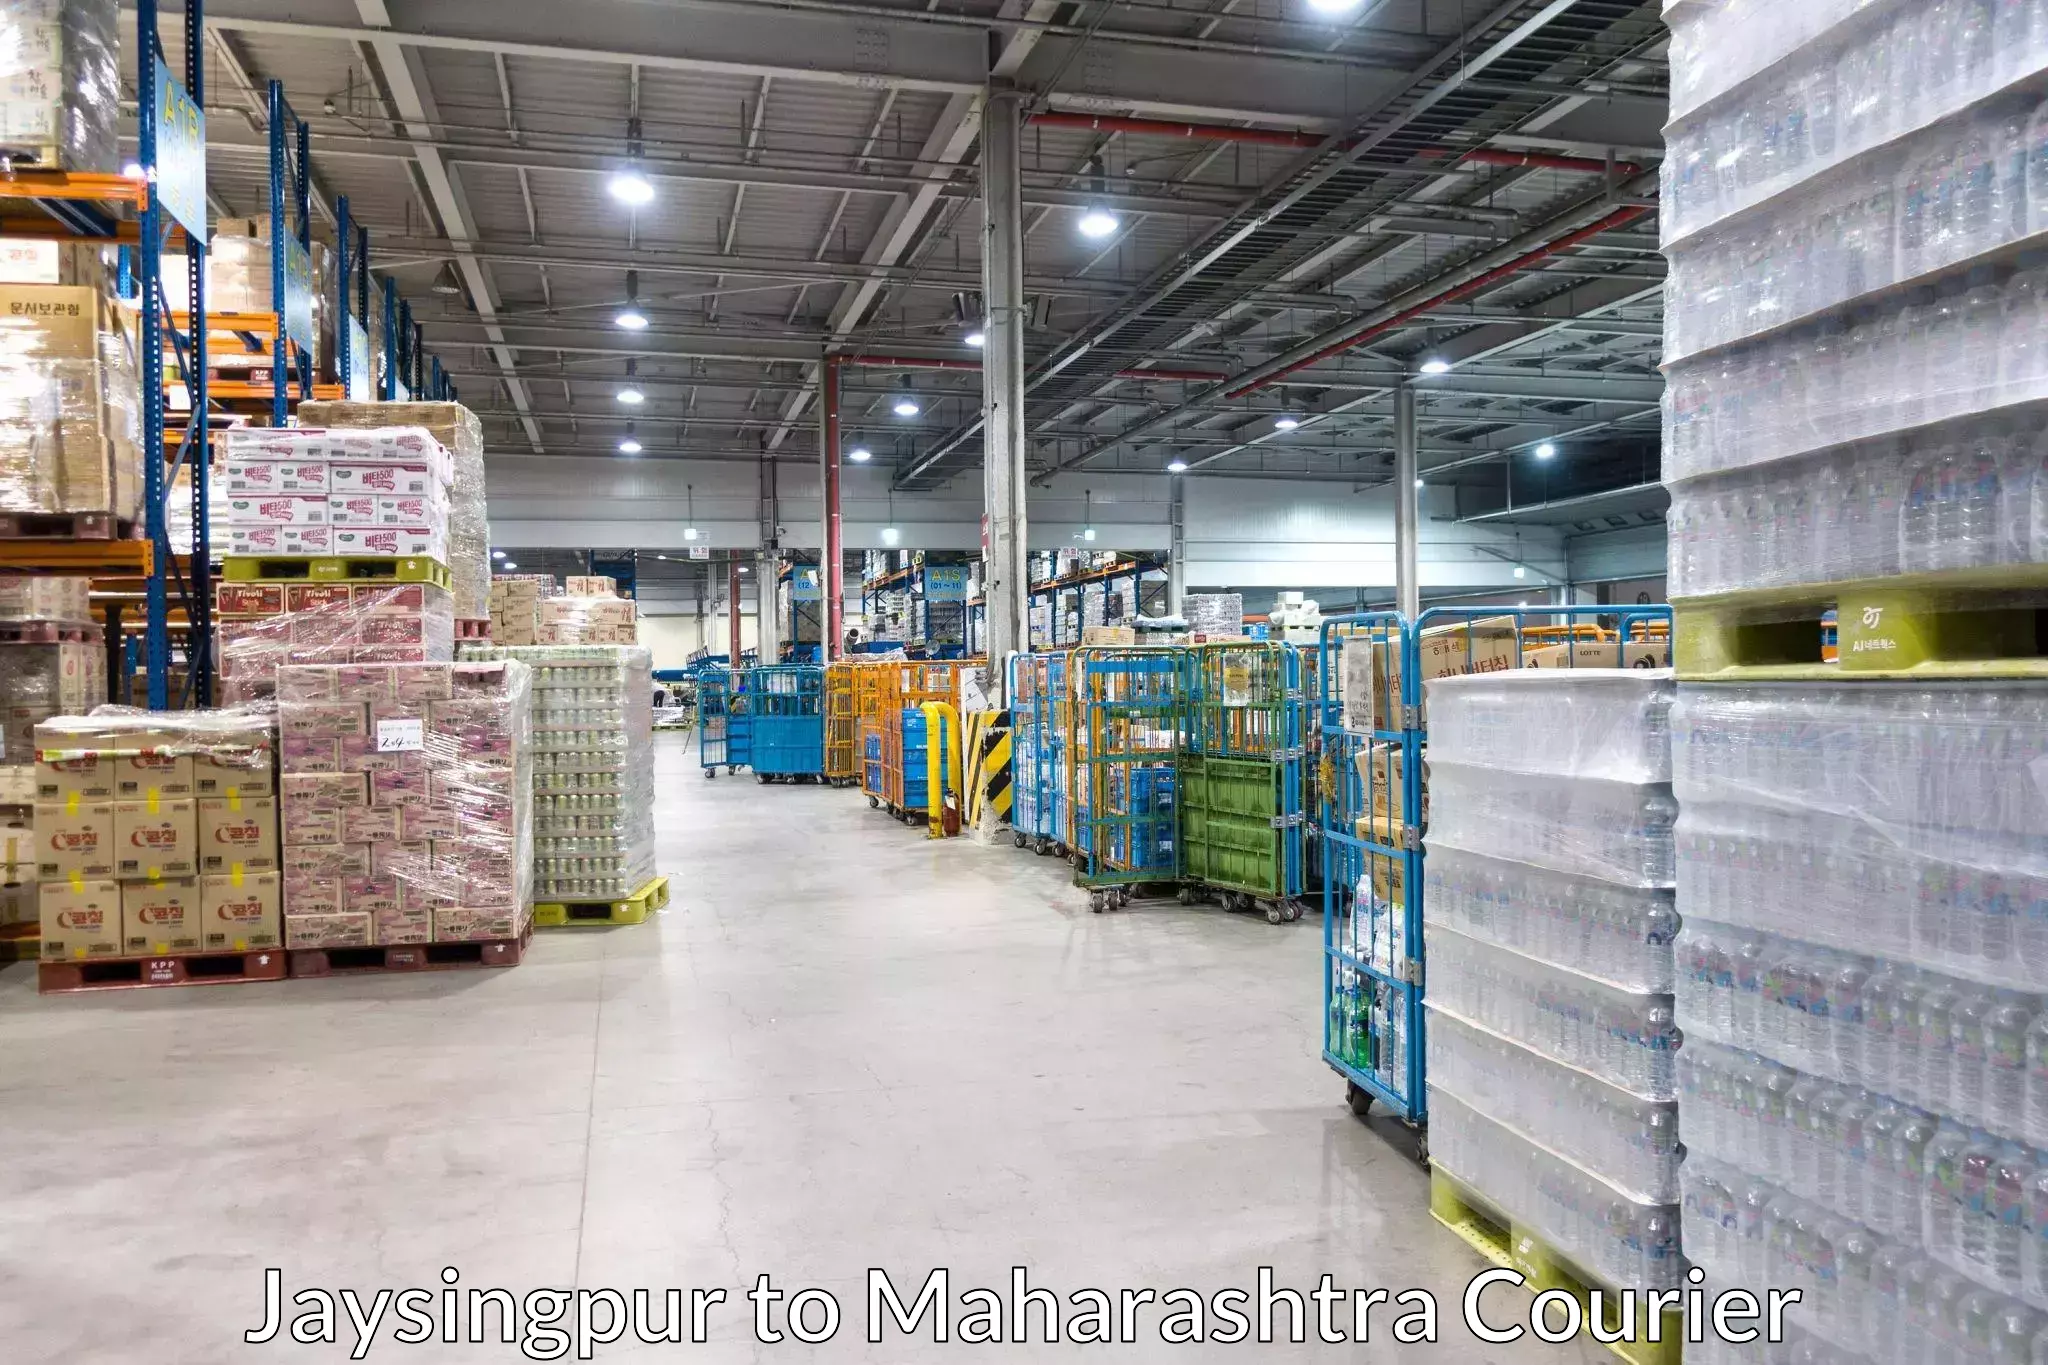 Cargo delivery service Jaysingpur to Symbiosis International Pune